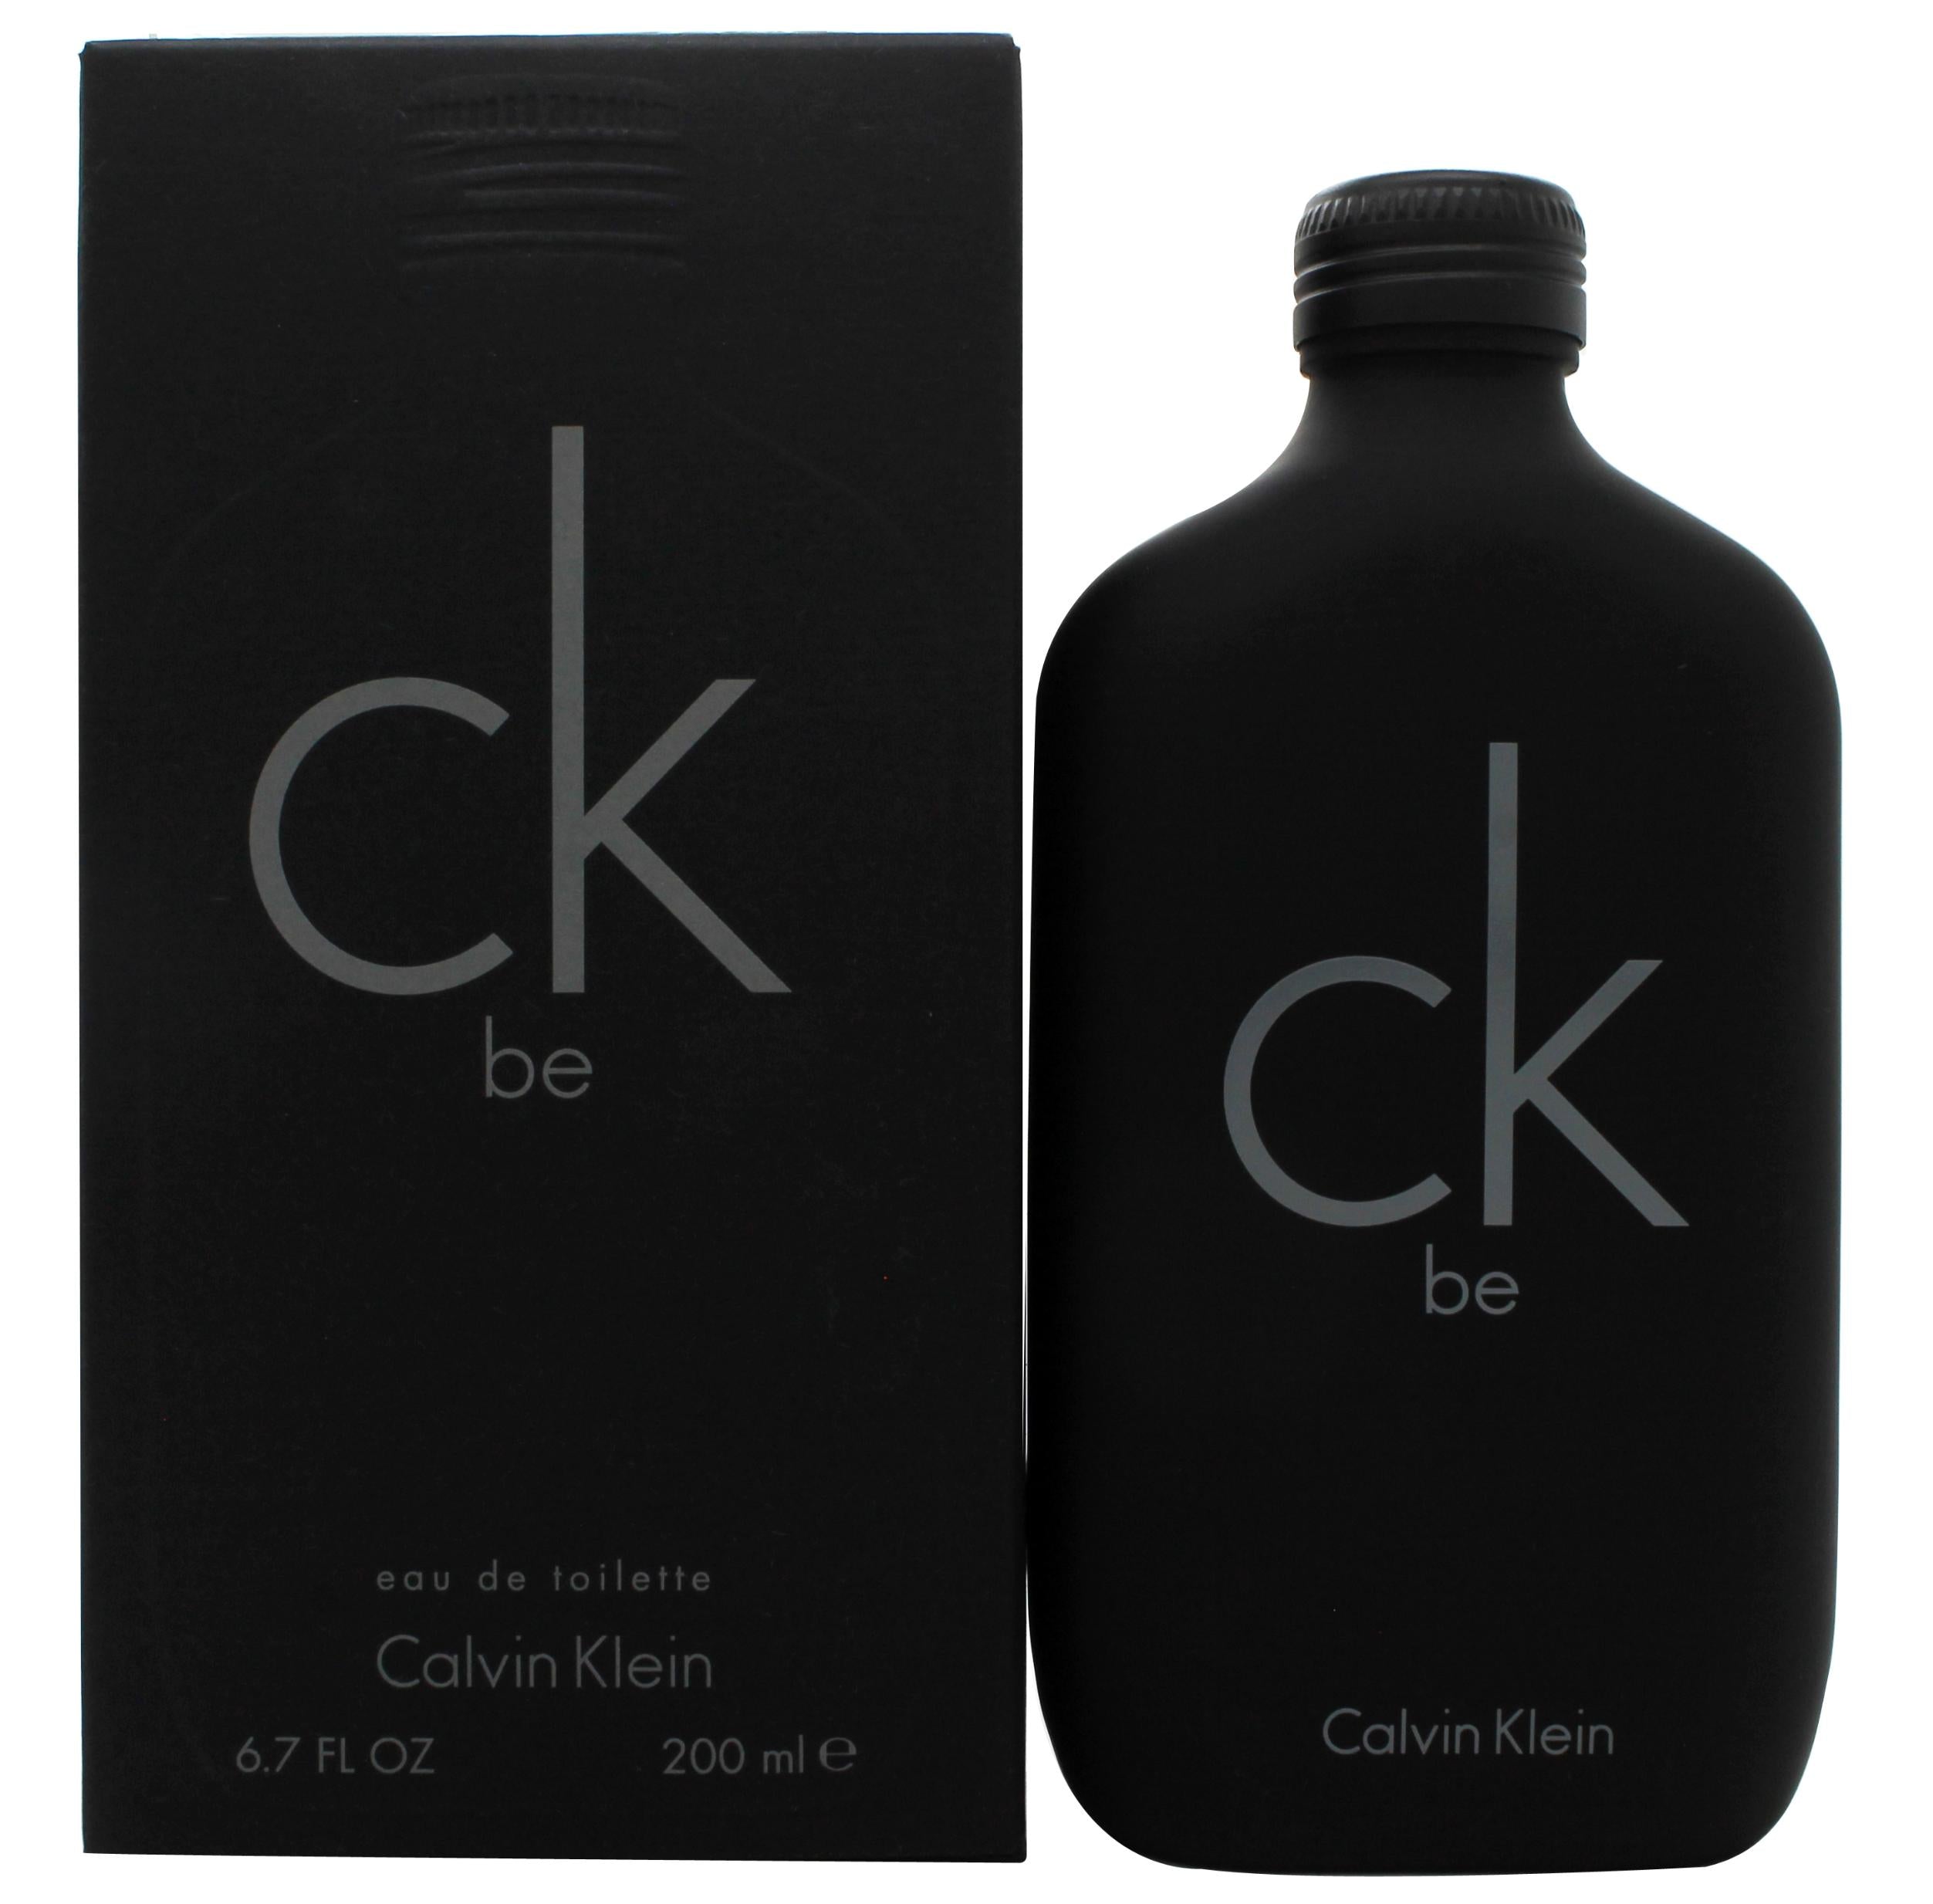 View Calvin Klein CK Be Eau De Toilette 200ml Spray information